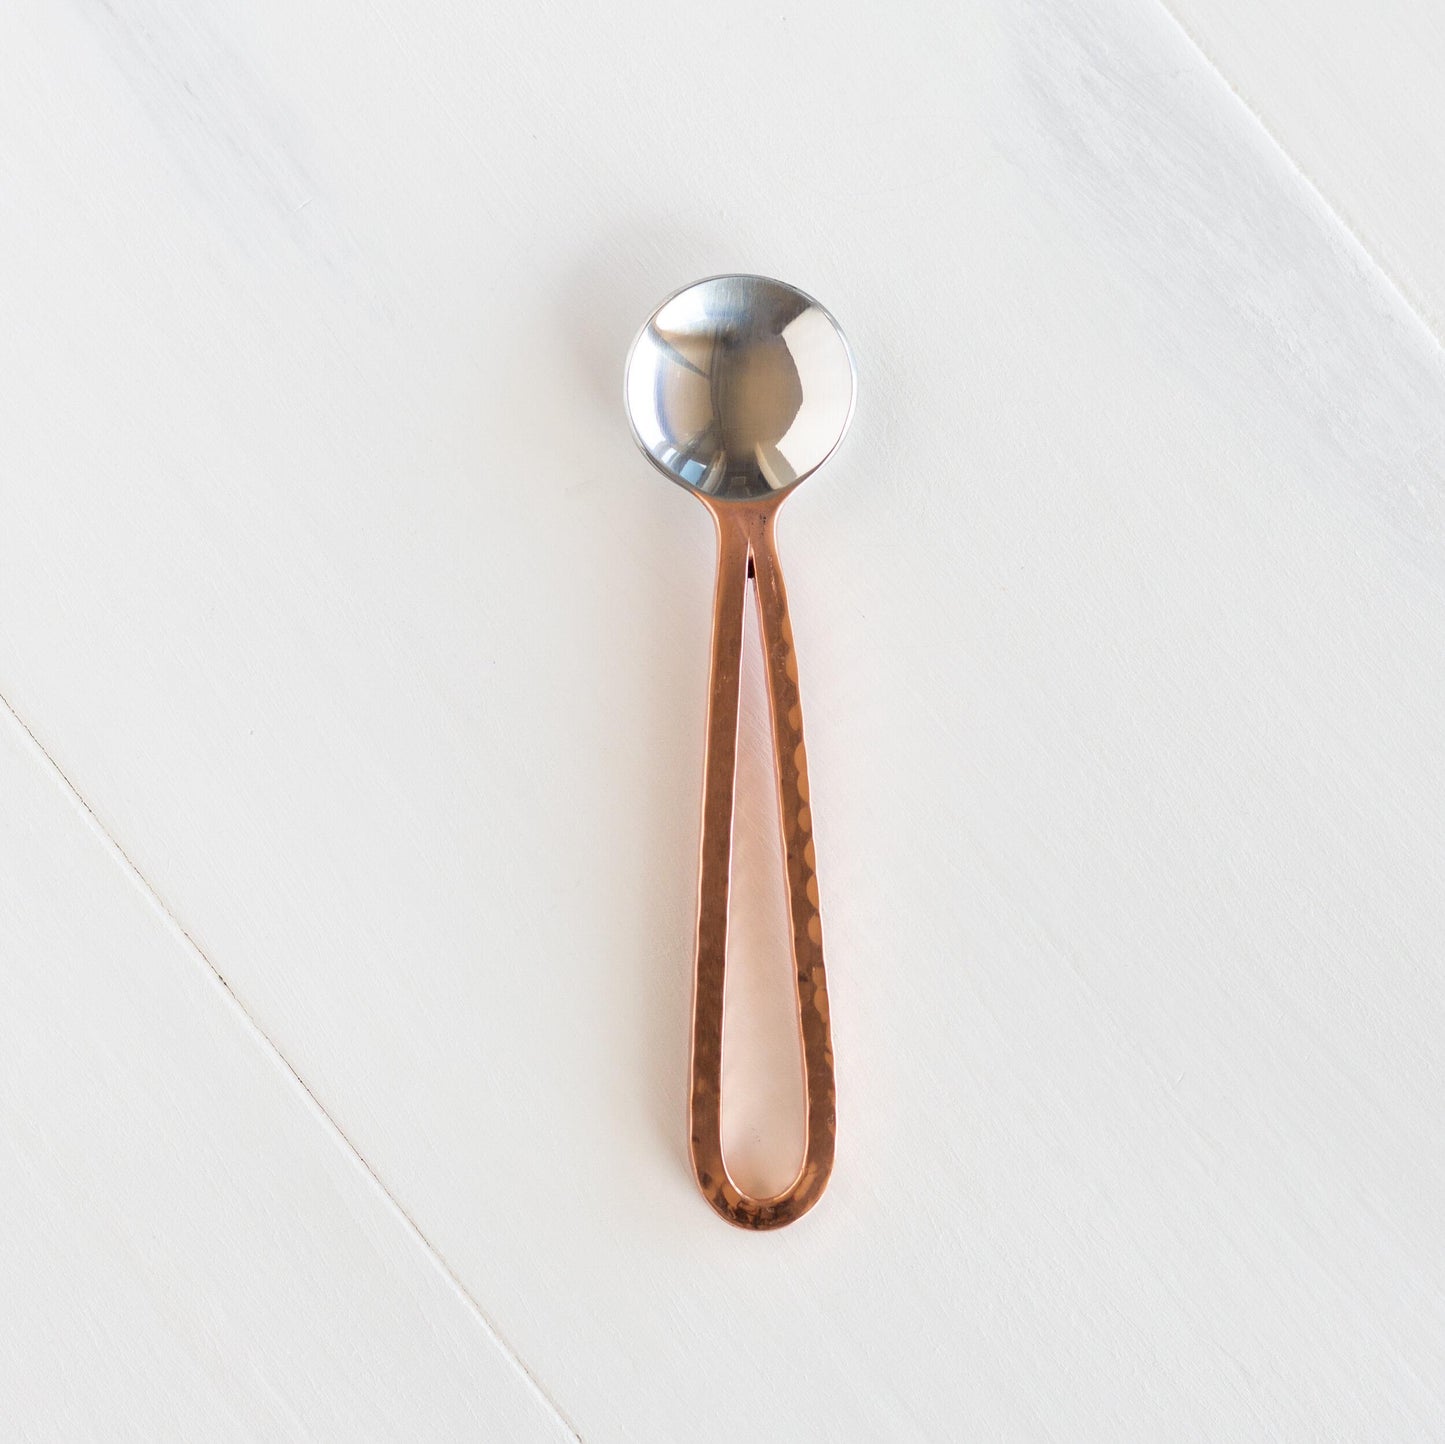 Copper and Stainless Steel Loop Handle Spoon – at ArtfulTea